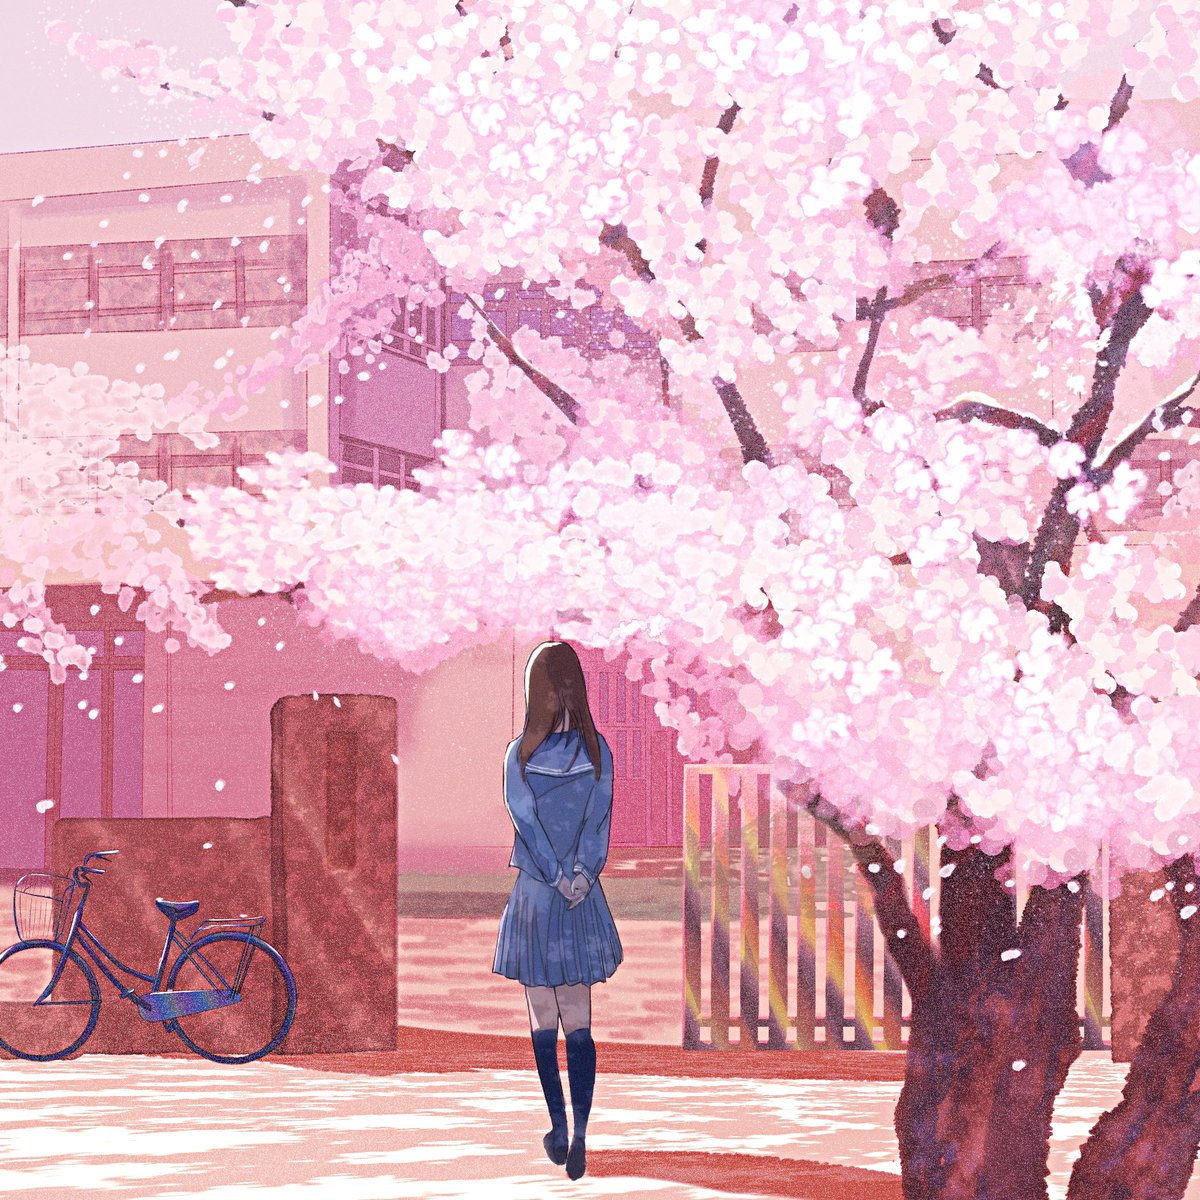 Lyandi リャンディ 今年は桜が咲くの 少し早いですね 春 いろいろ変化のある季節です 大変な状況がまだ続いていますが 新学期 新年度が皆さんぬとって良いものになりますように Ibispaint アイビス アイビスペイント